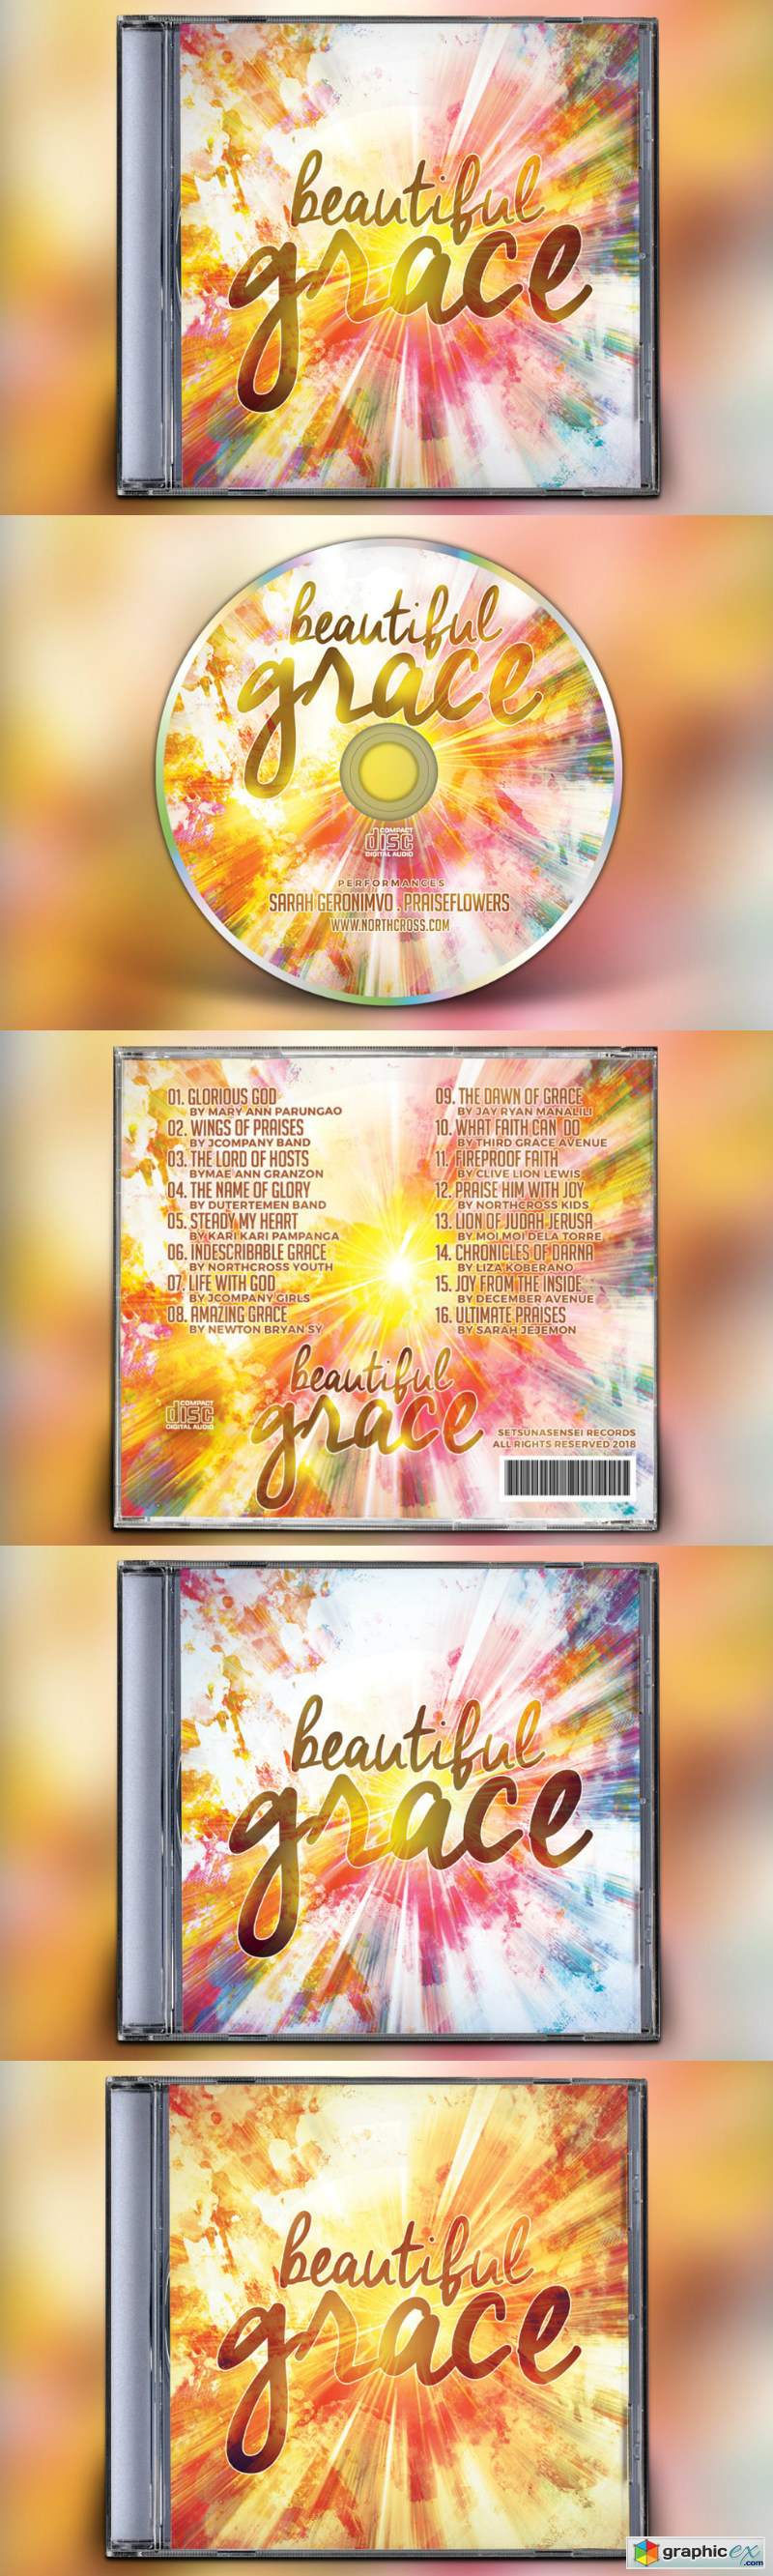 Beautiful Grace CD Album Artwork